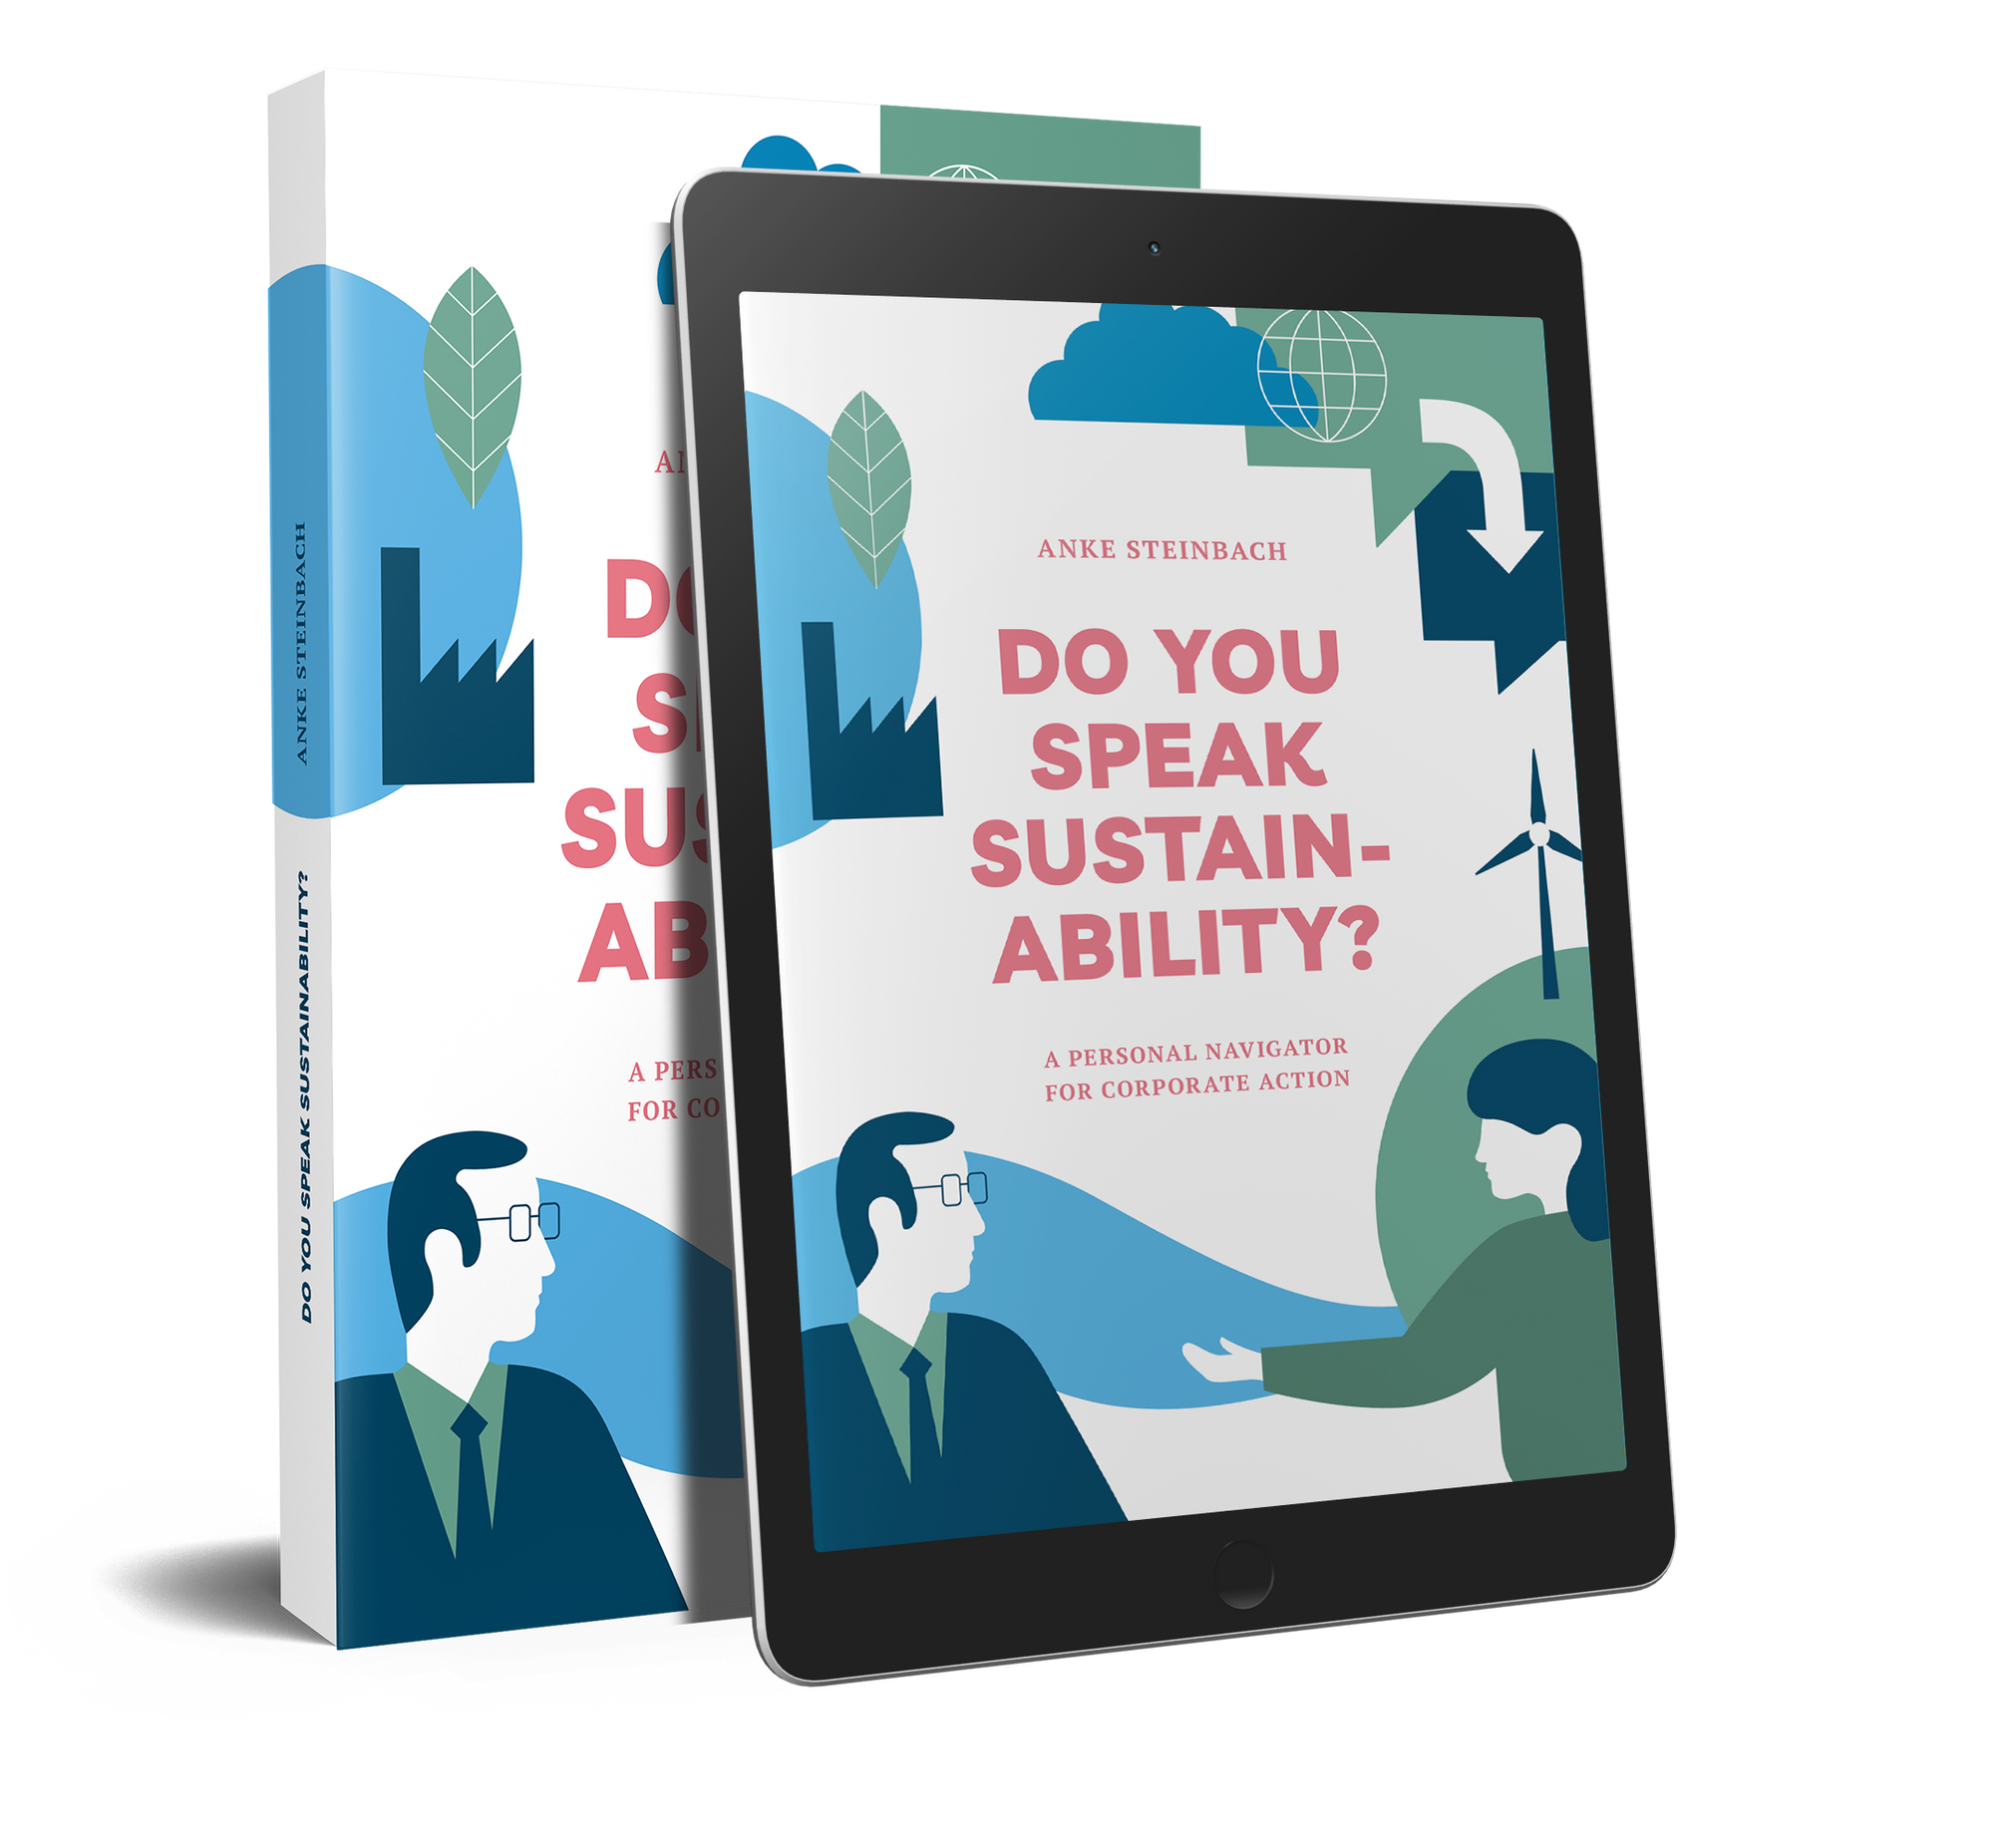 Ebook and Hardcover Bundle "Do you speak sustainabilty?"